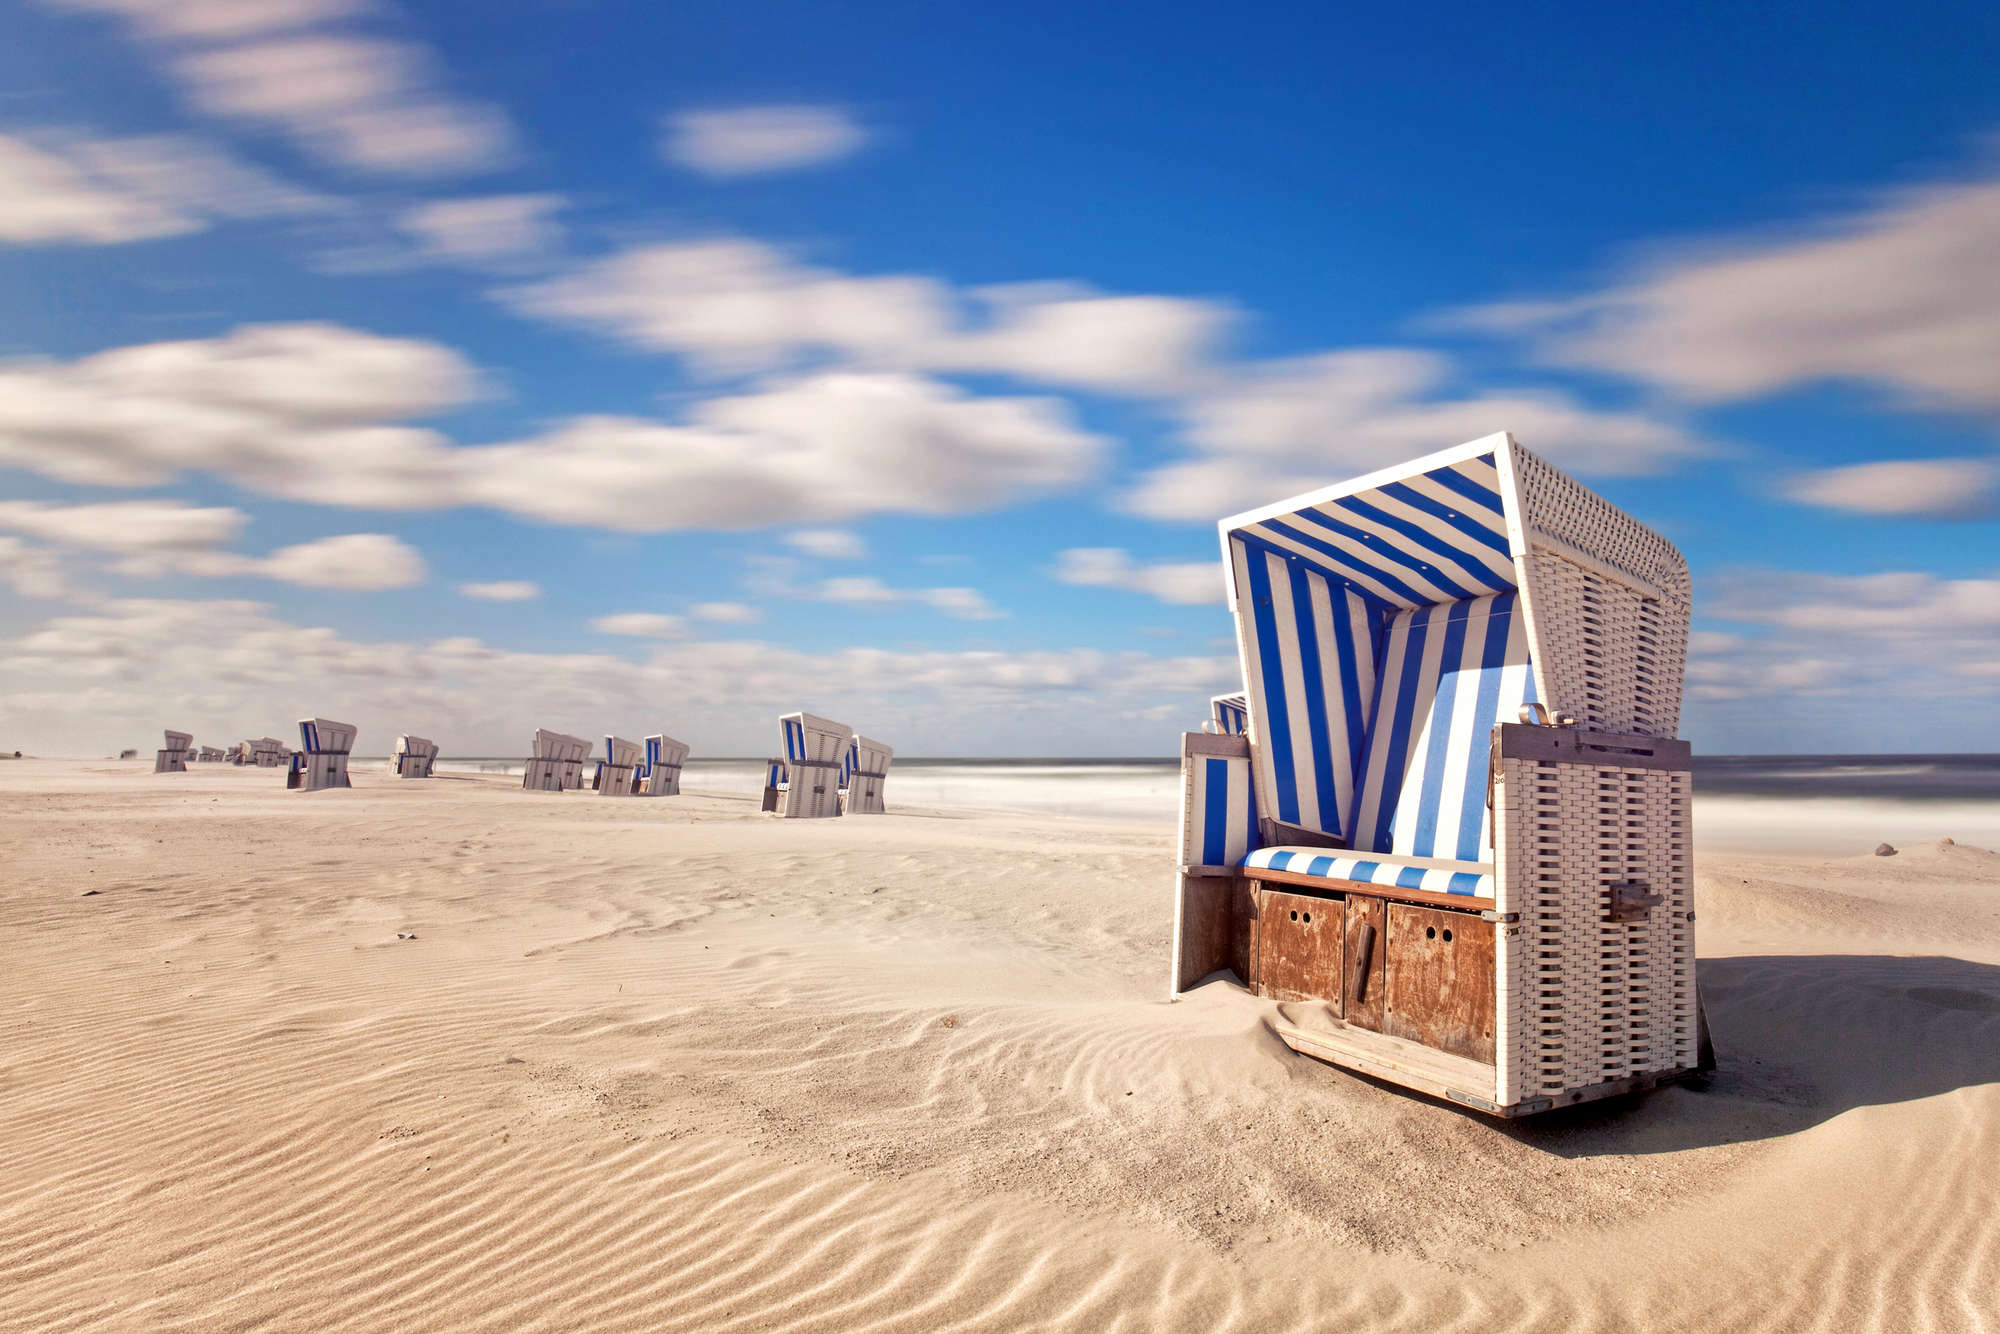             Beach mural beach chairs in the sand on textured fleece
        